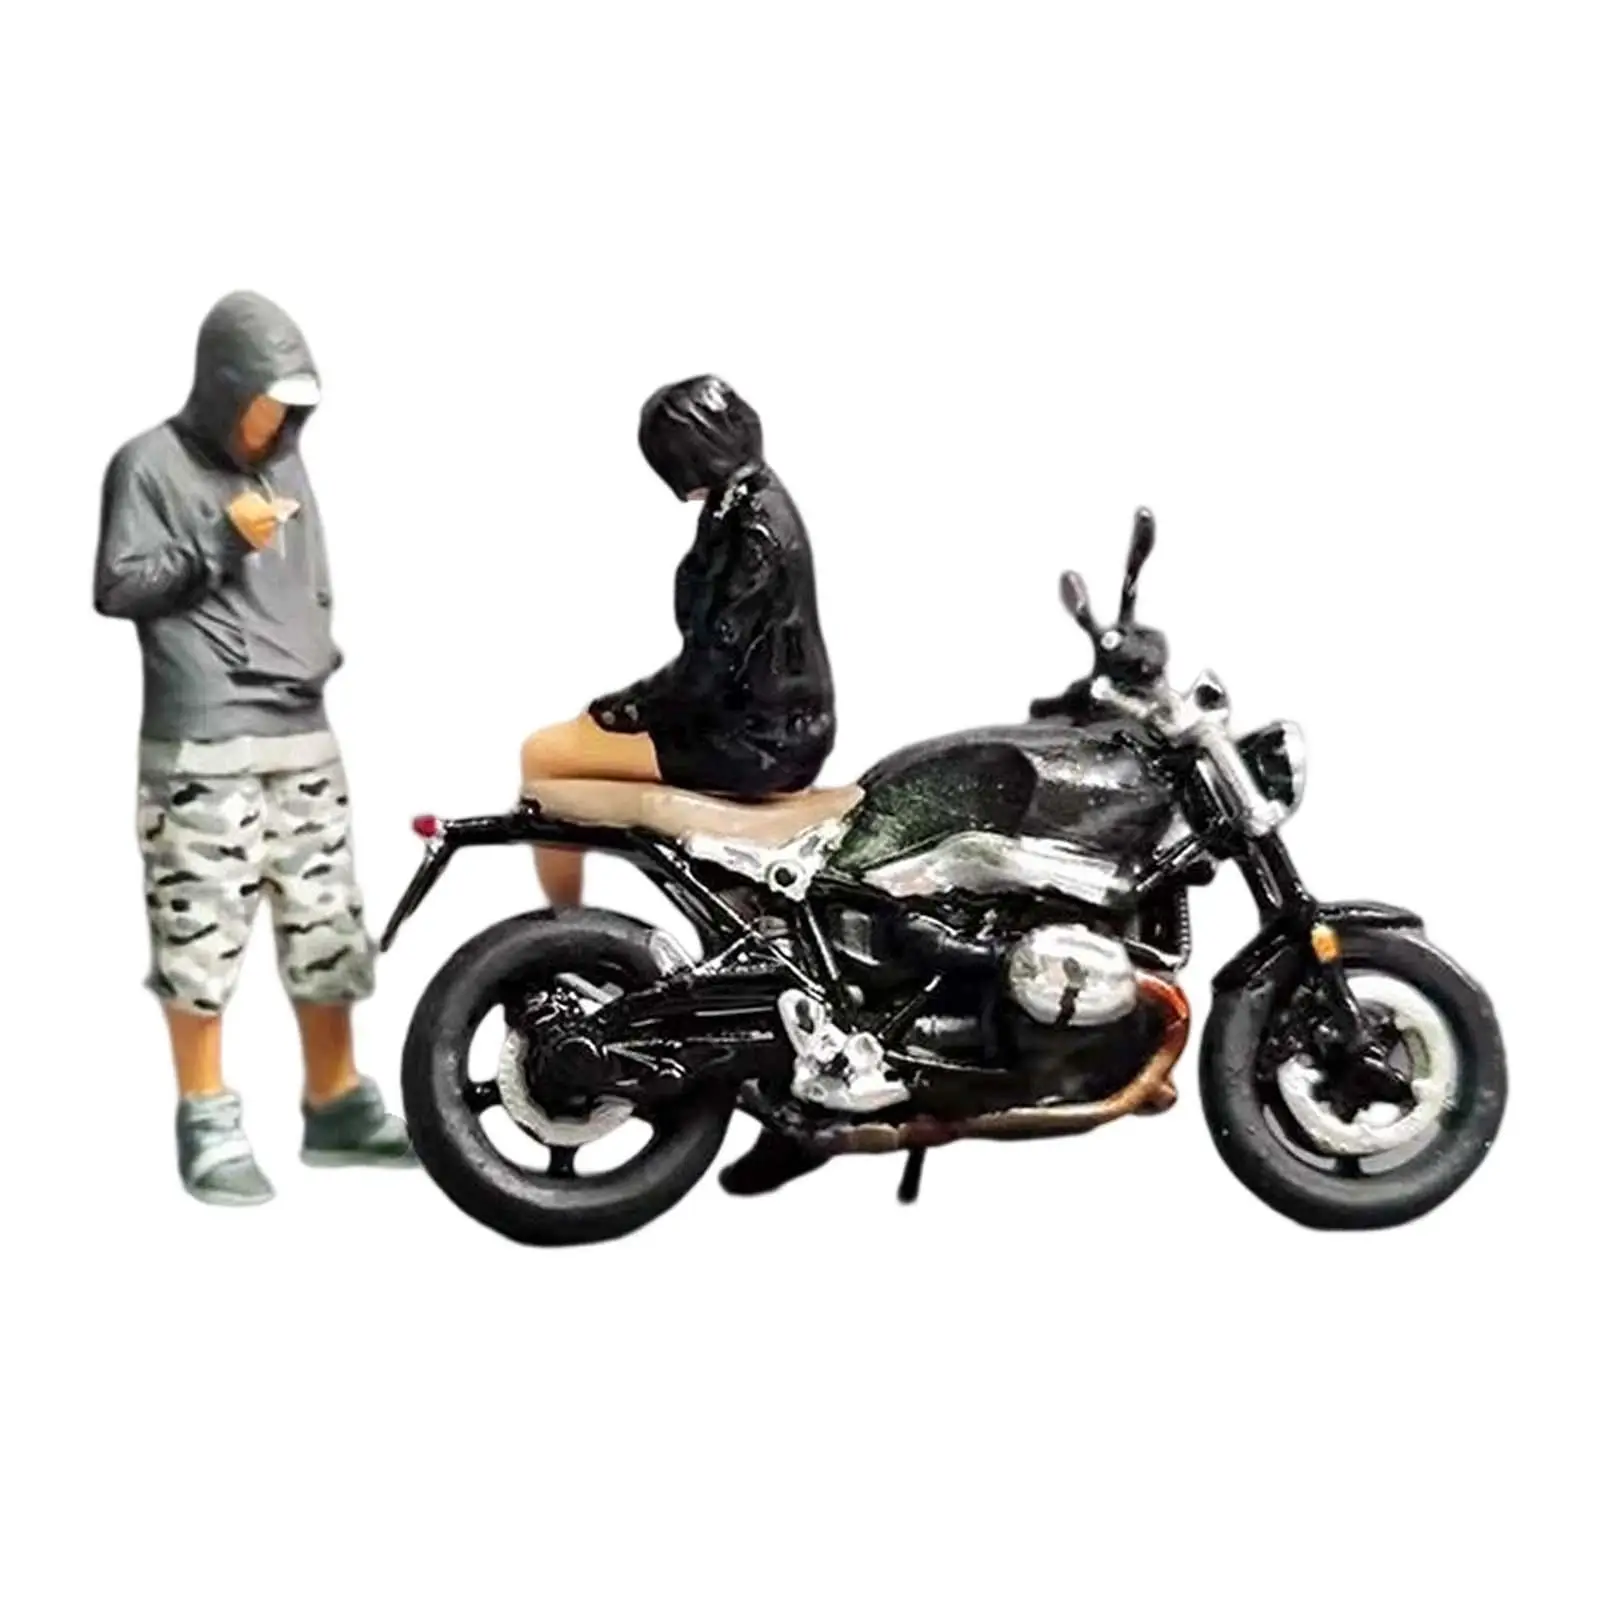 1:64 Figure Motorcycle Desktop Ornament Miniature Scenes DIY Projects Doll Figurines